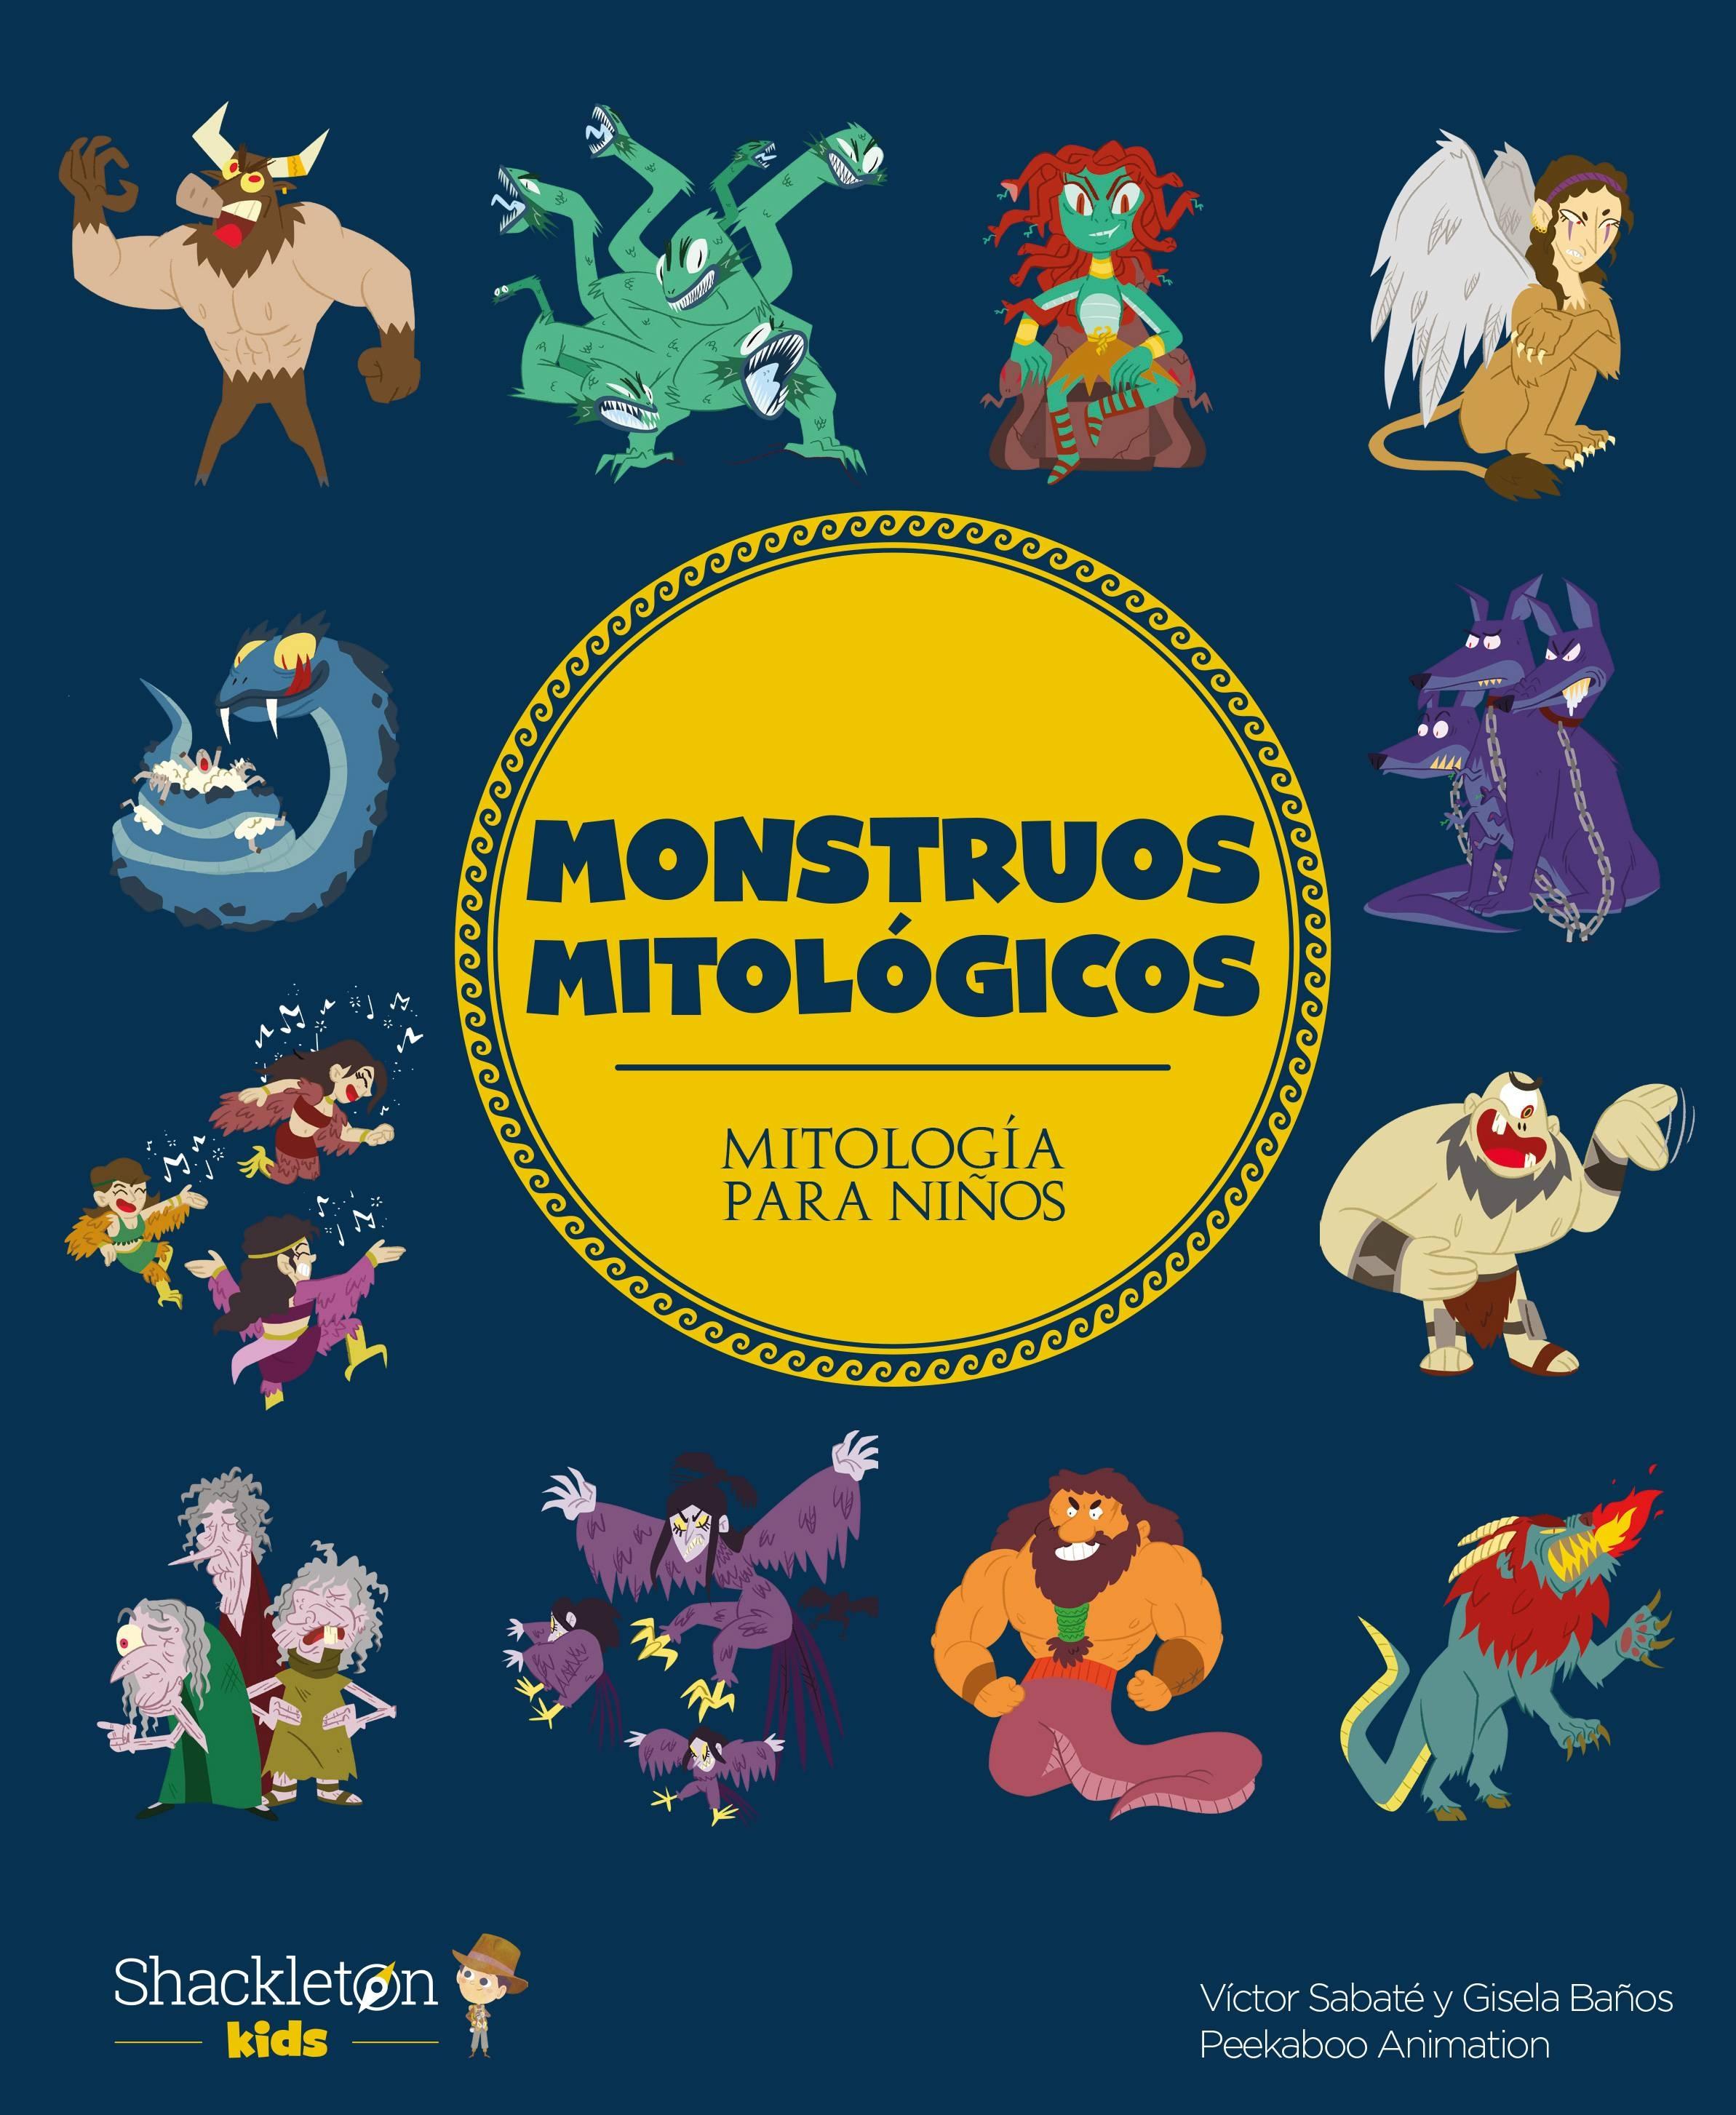 Monstruos mitológicos "Mitología para niños"